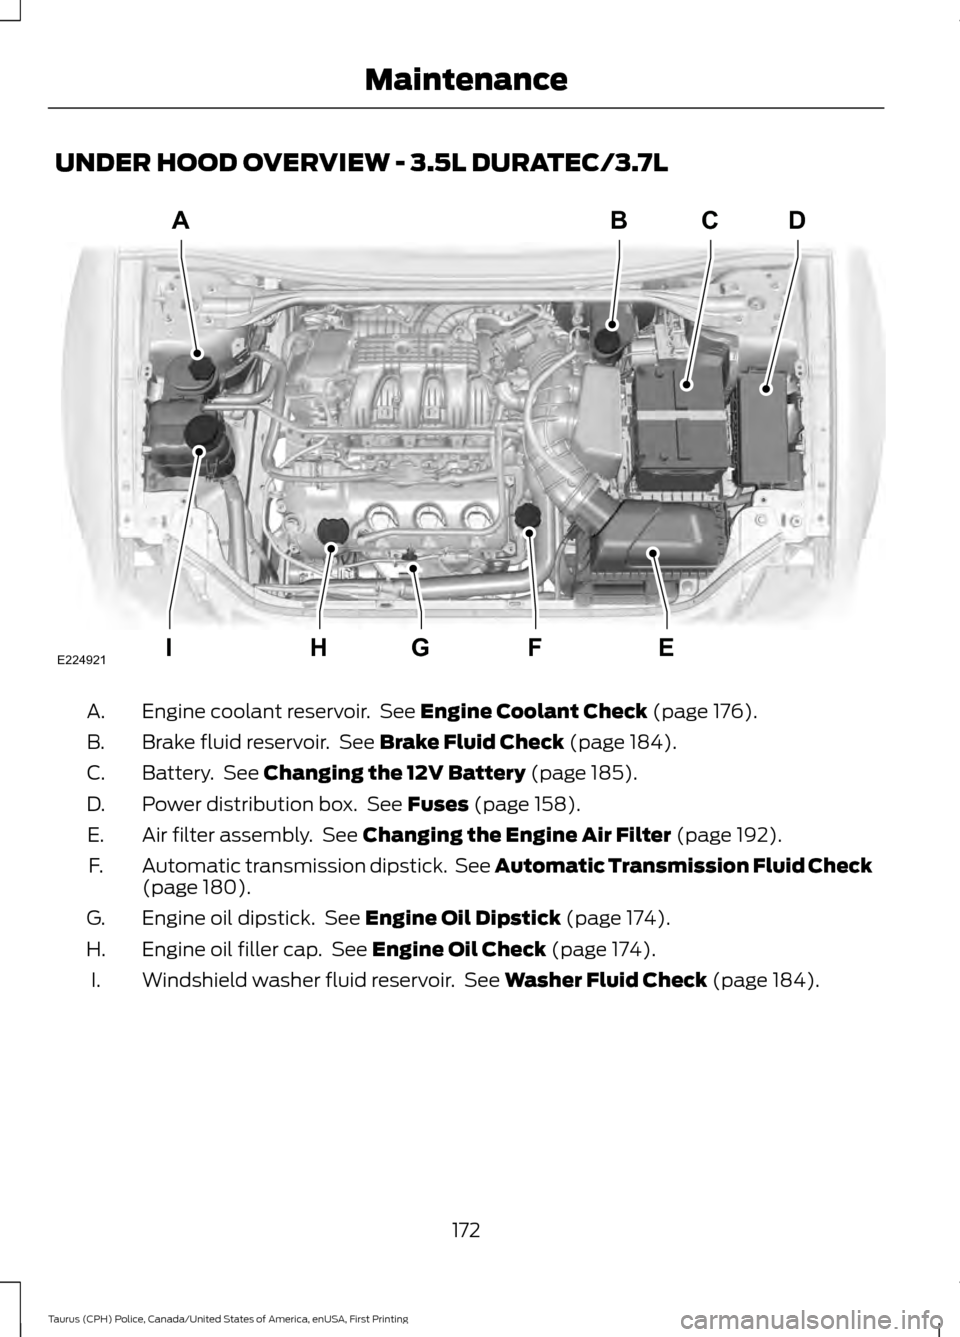 FORD POLICE INTERCEPTOR SEDAN 2017 1.G User Guide UNDER HOOD OVERVIEW - 3.5L DURATEC/3.7L
Engine coolant reservoir.  See Engine Coolant Check (page 176).
A.
Brake fluid reservoir.  See 
Brake Fluid Check (page 184).
B.
Battery.  See 
Changing the 12V